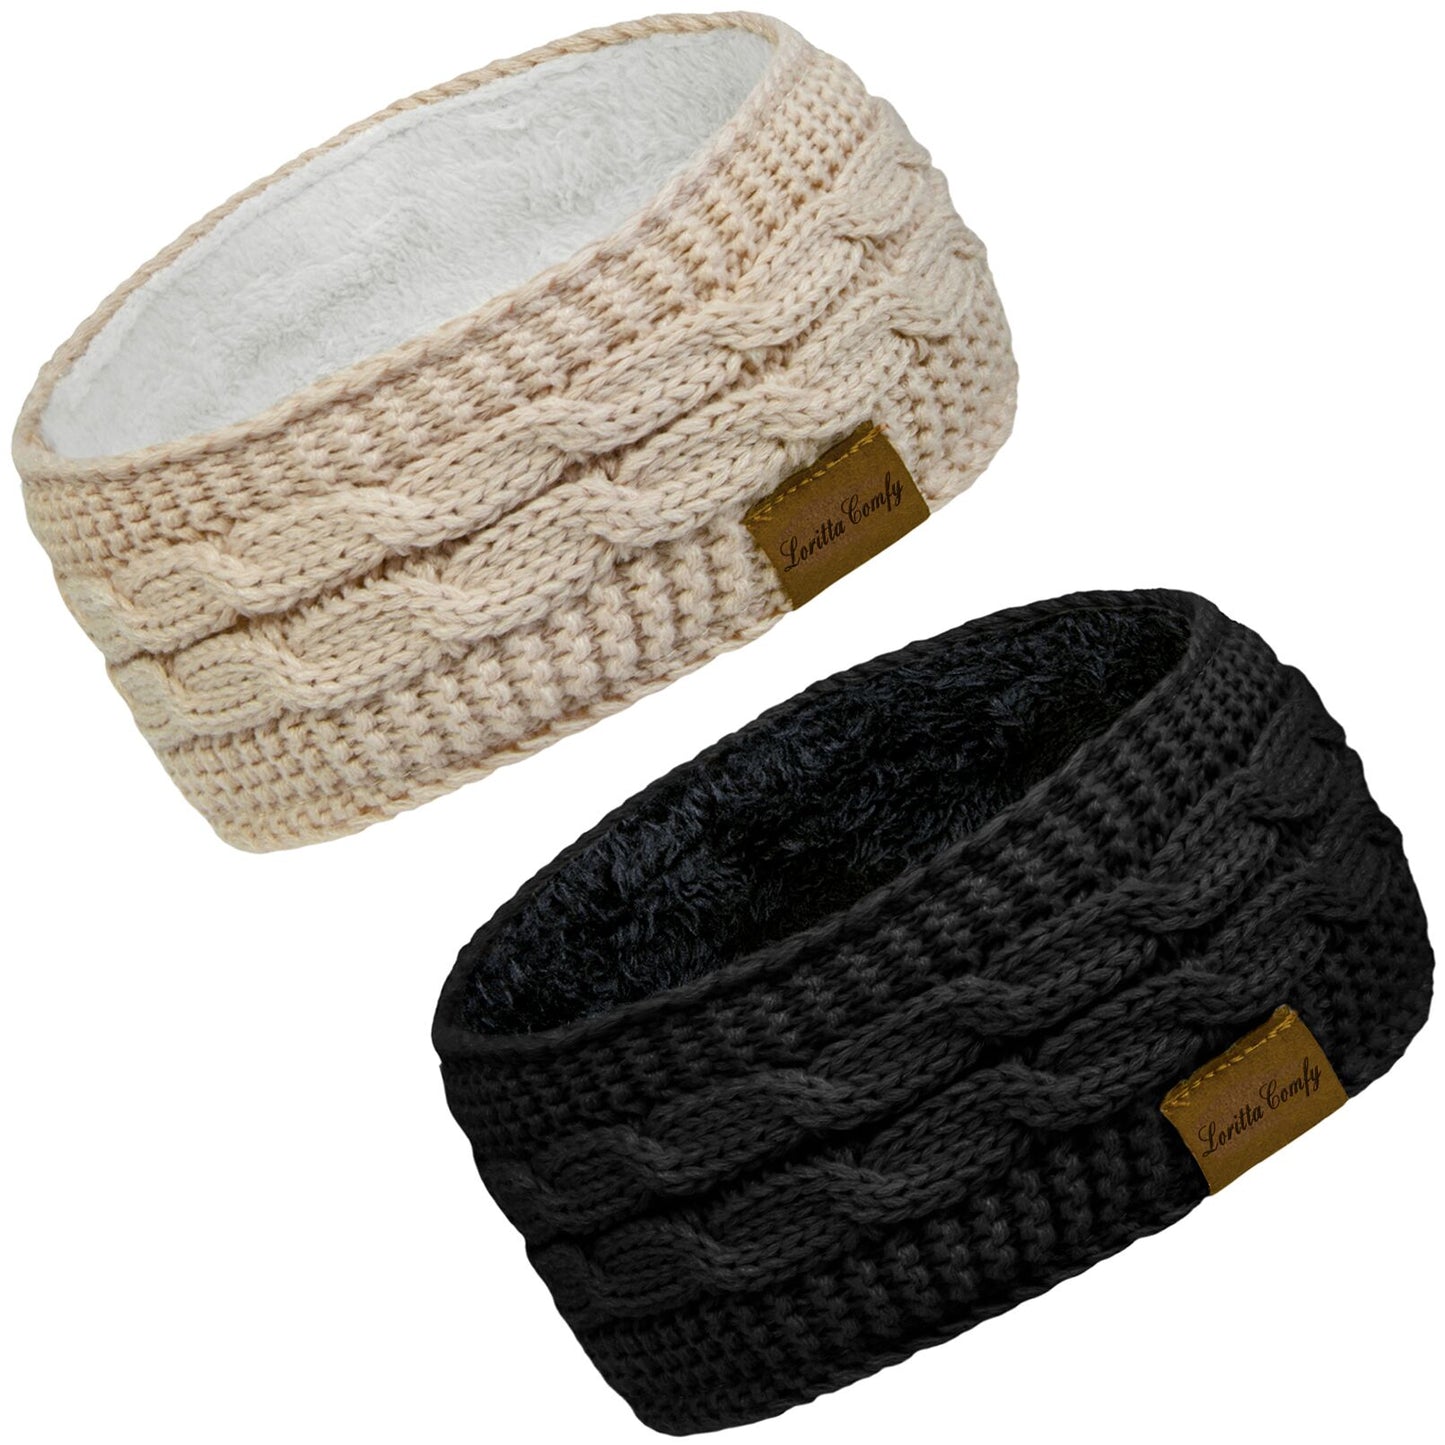 Loritta Comfy 2 Pack Womens Headbands Winter Warm Fashion Ear Warmers, Black and Beige